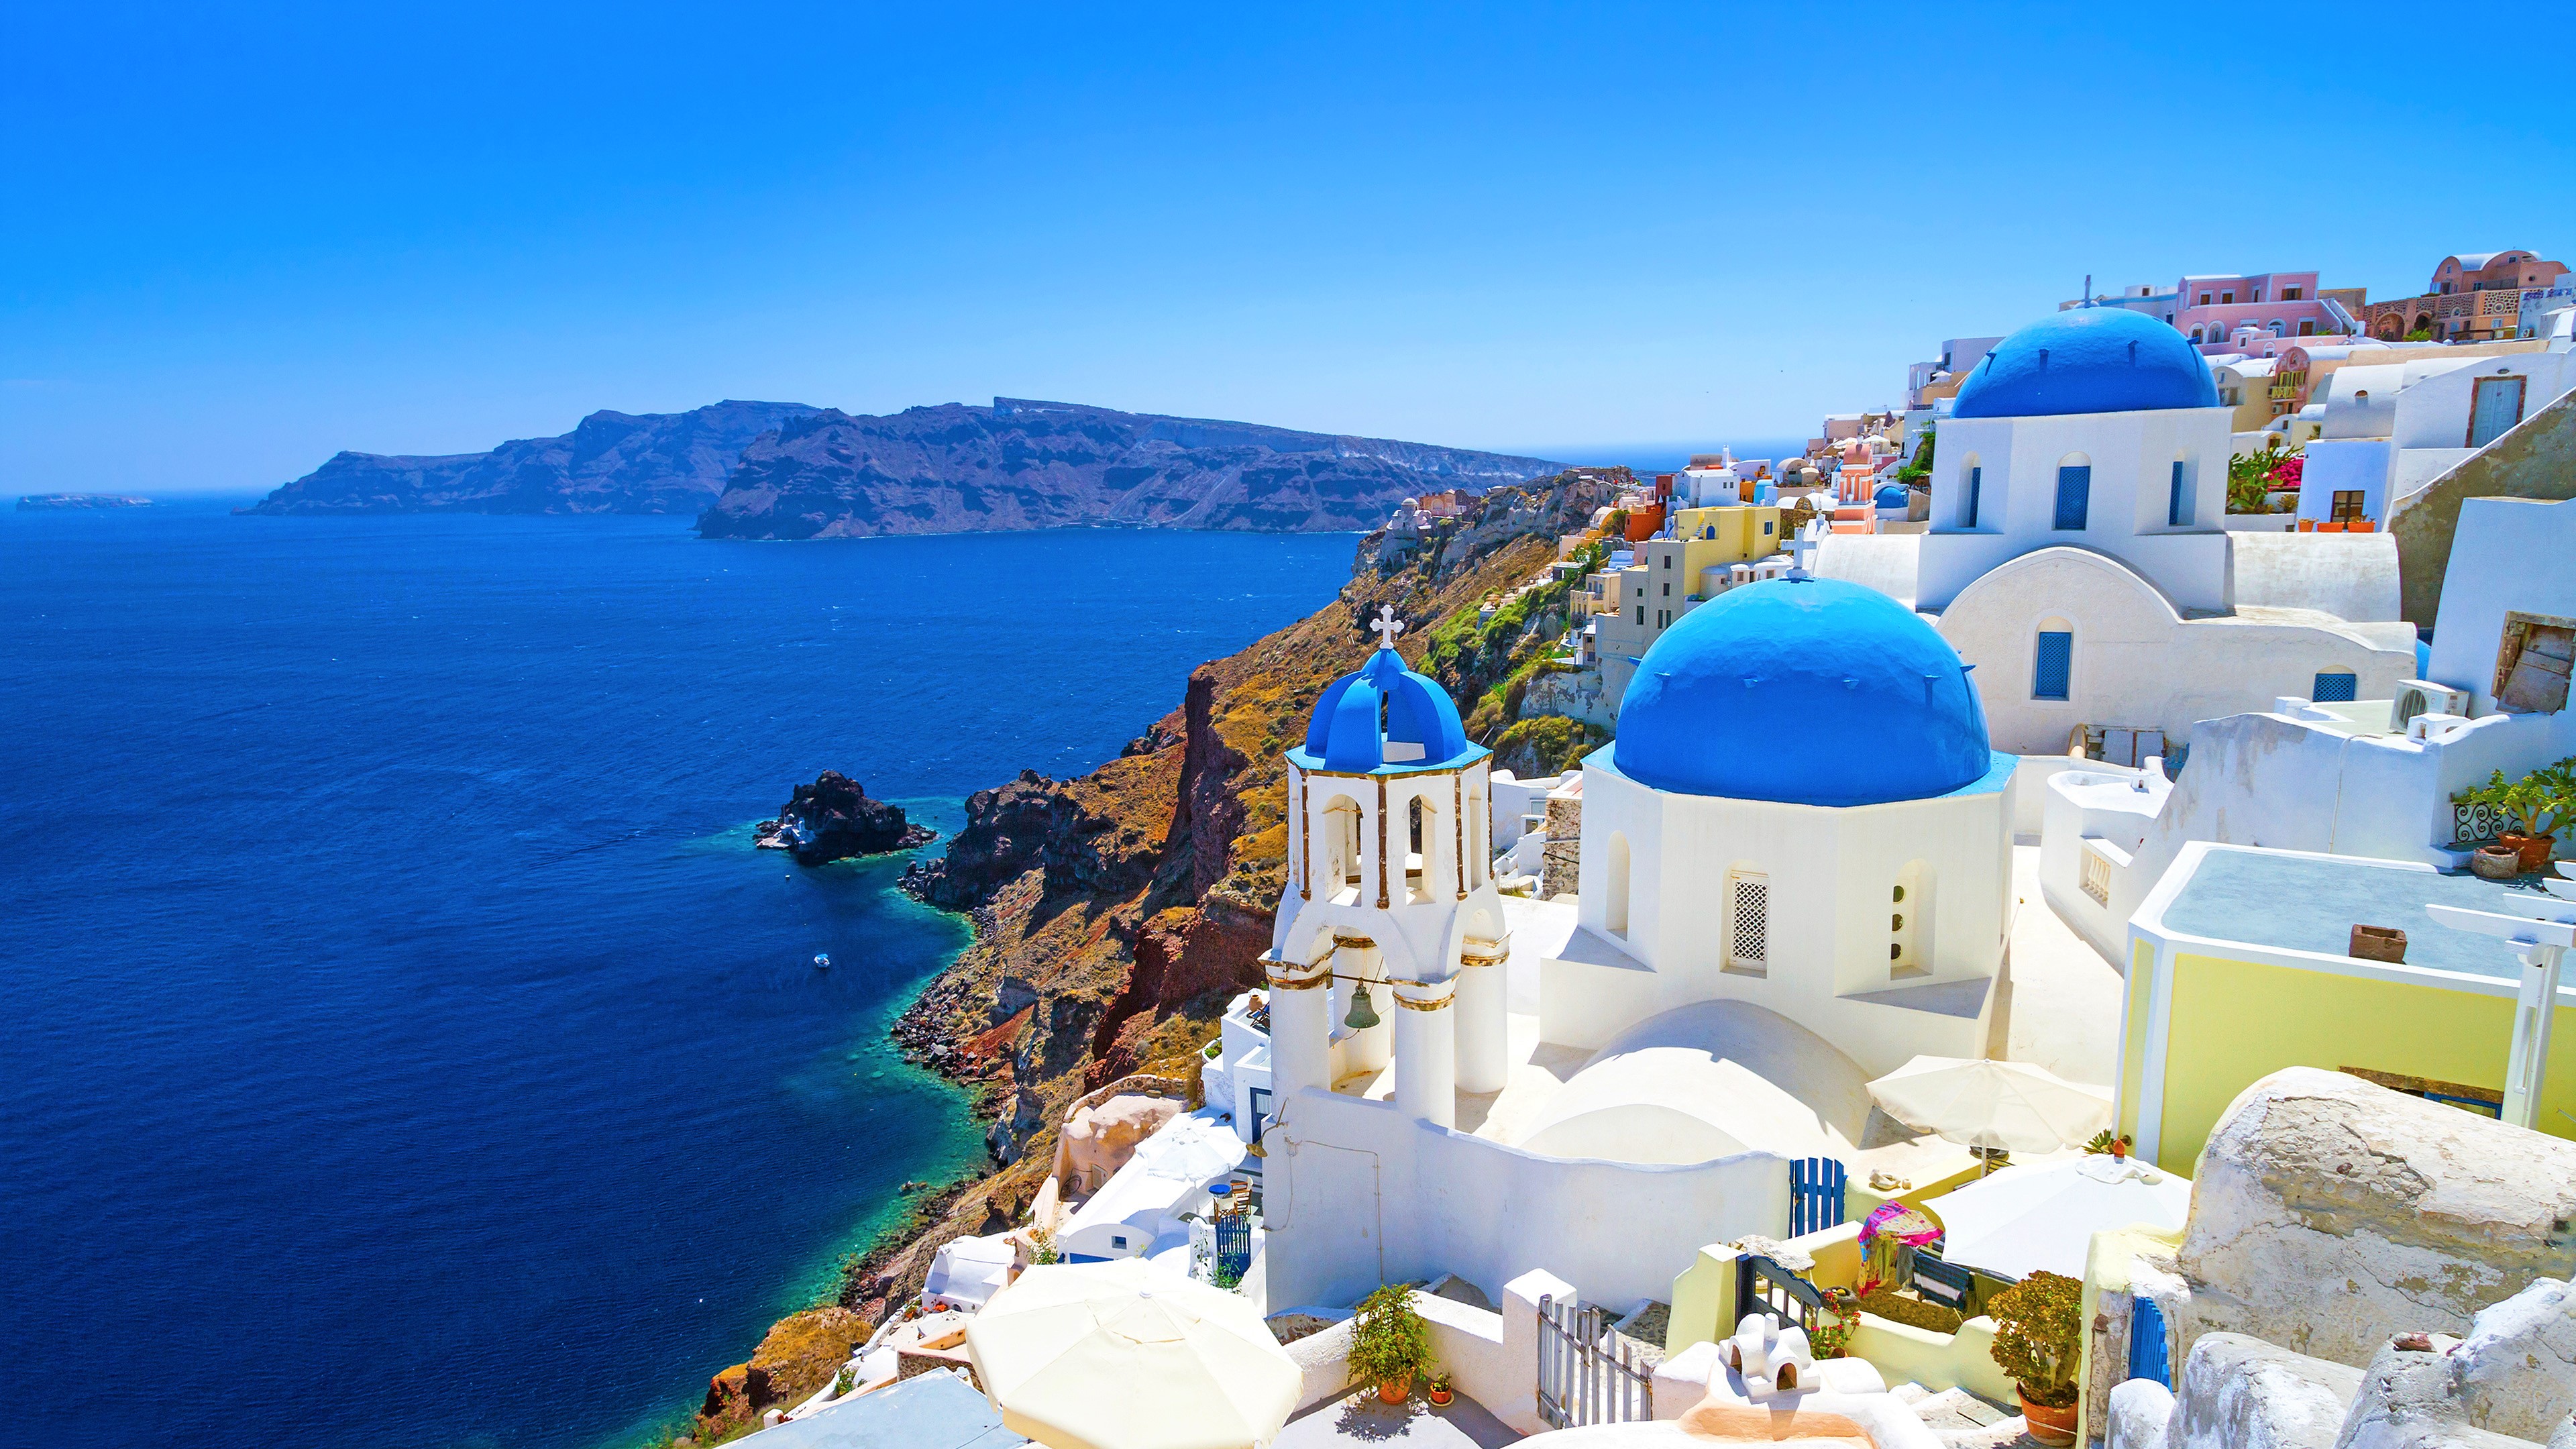 Santorini Greece 4k Ultra HD Wallpaper Background Image